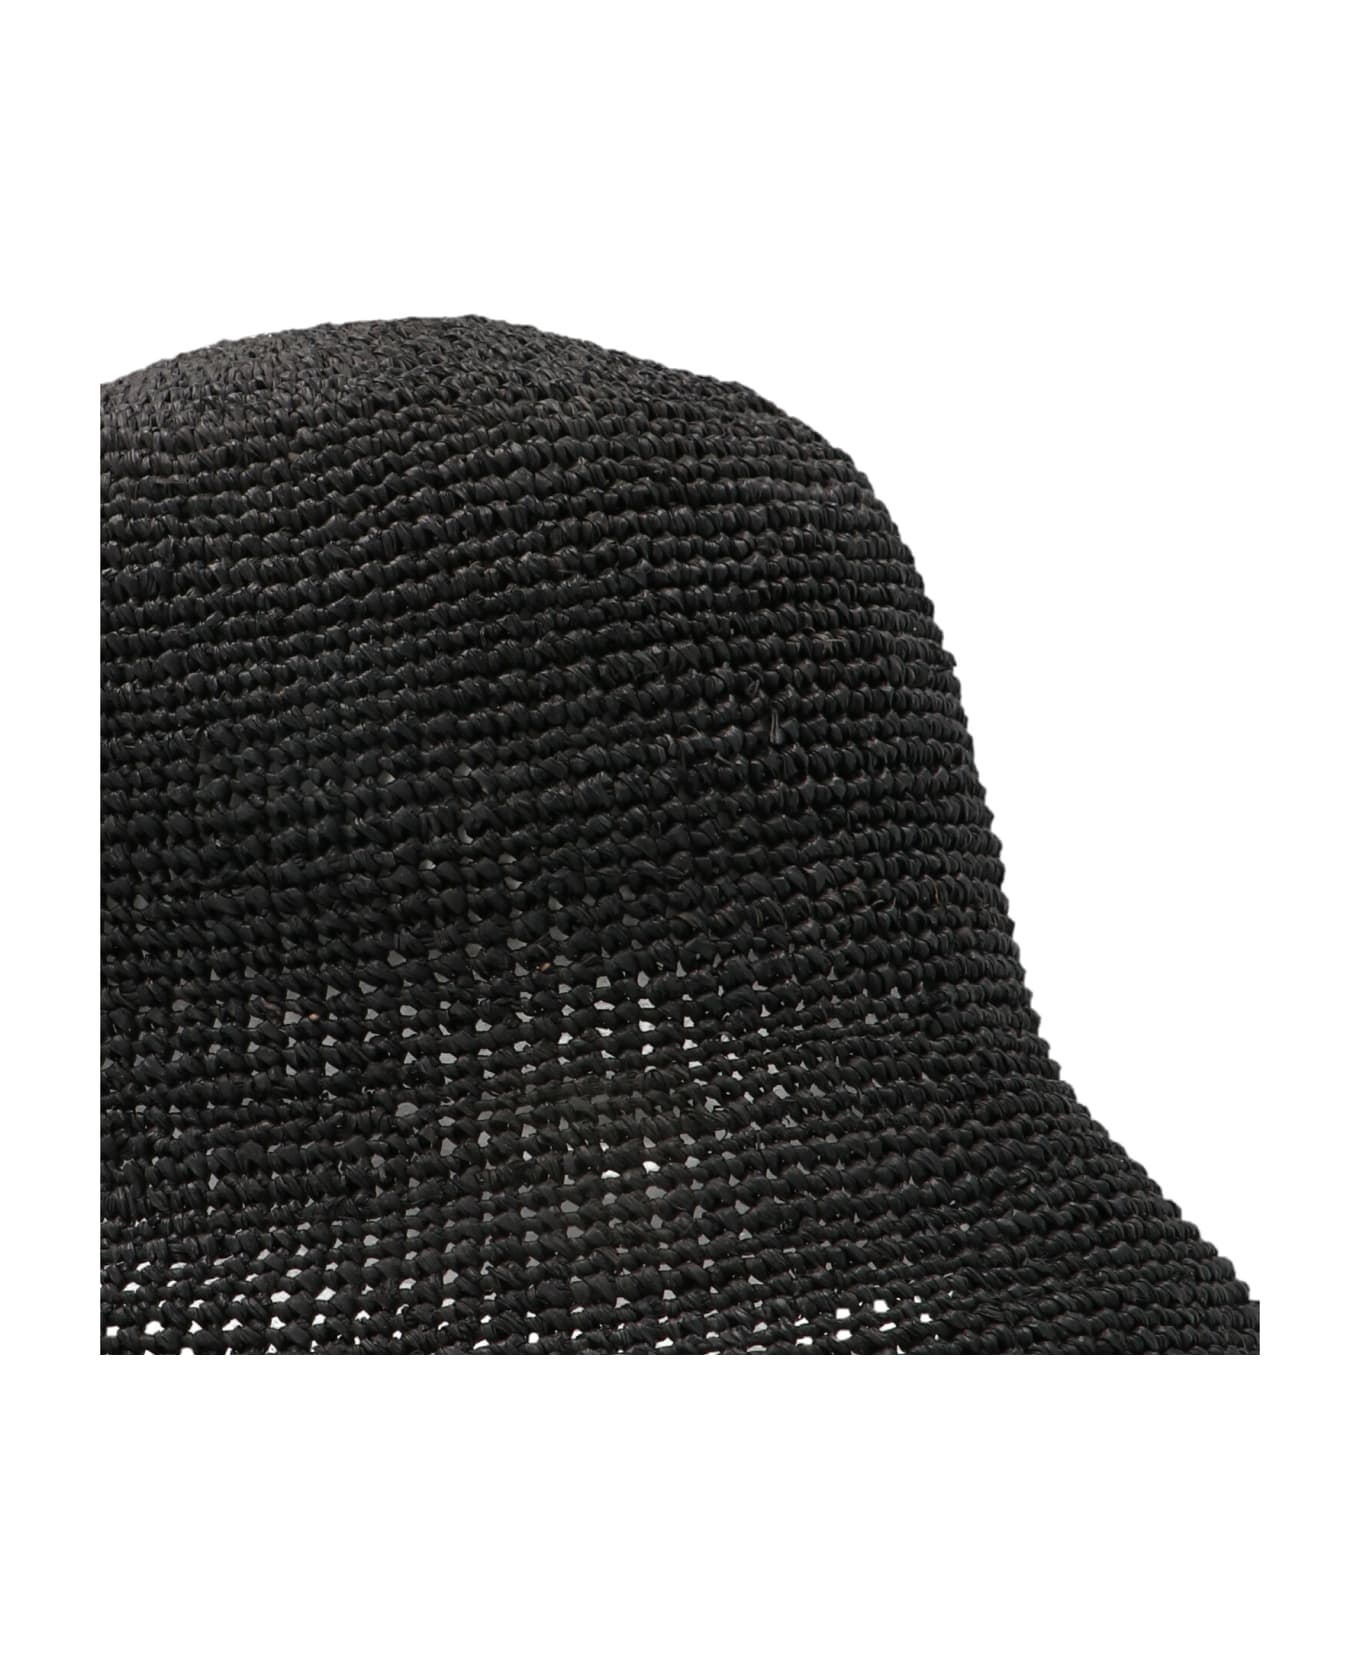 Ibeliv Andao Bucket Hat - Black   帽子